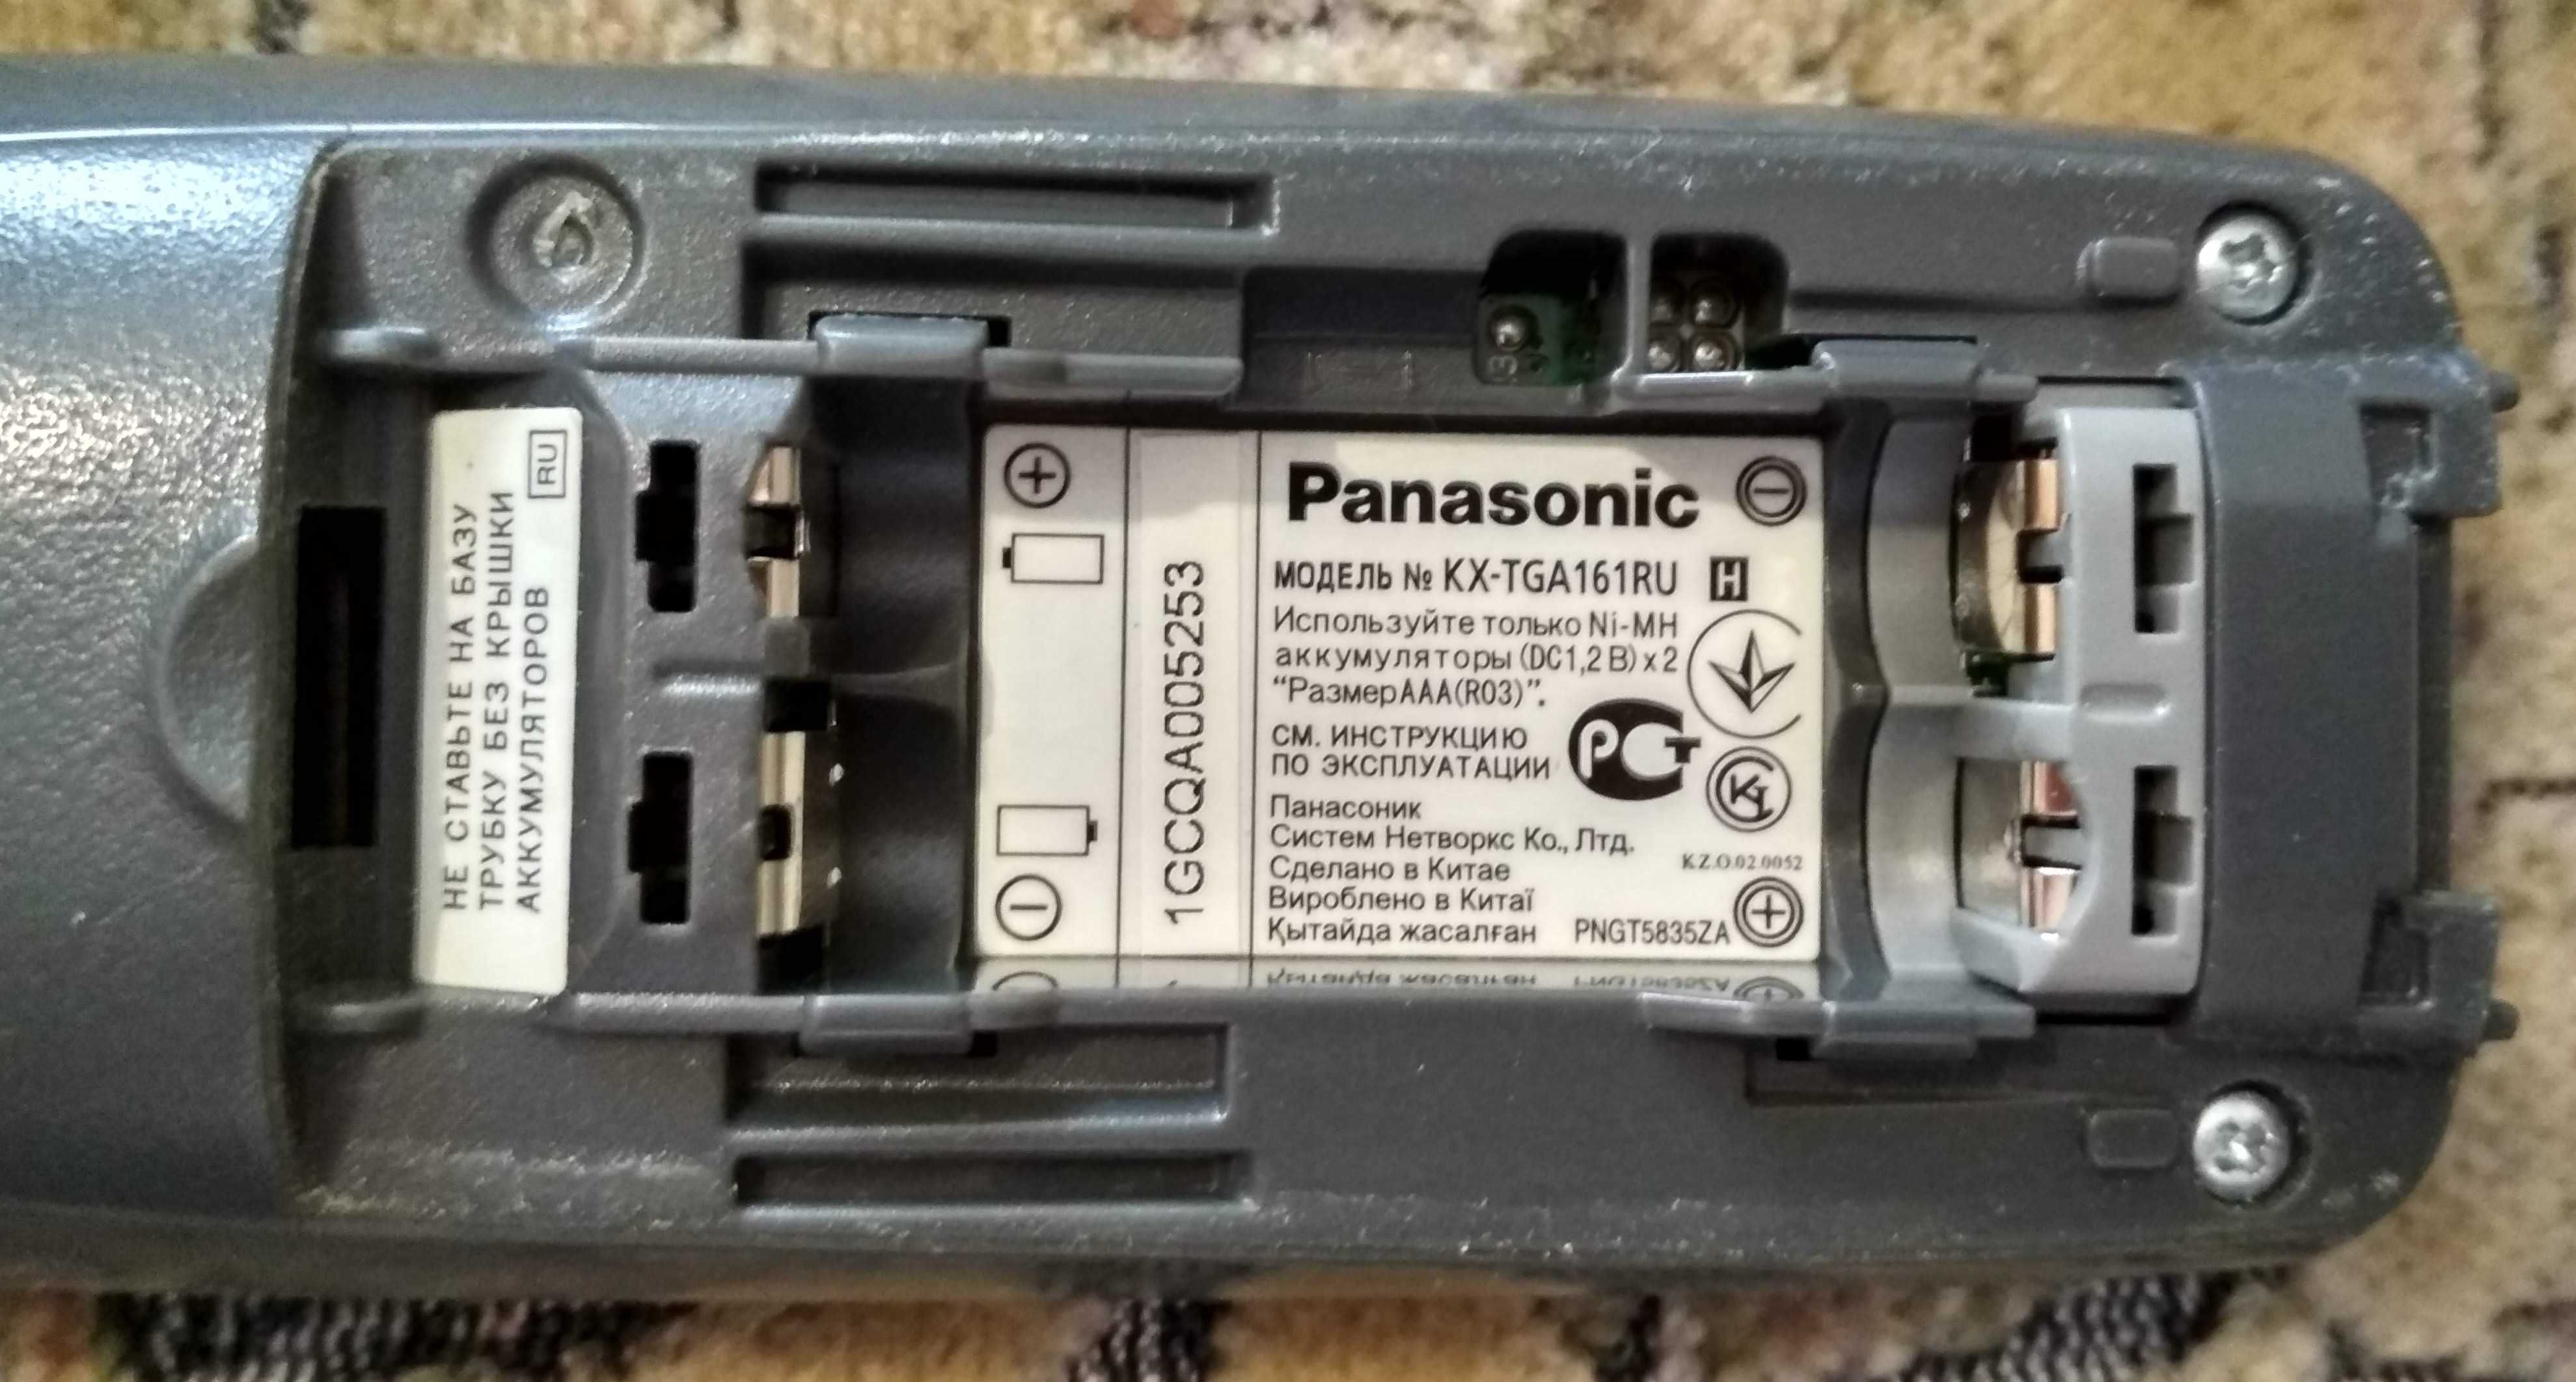 Panasonic KX-TG1612UAH